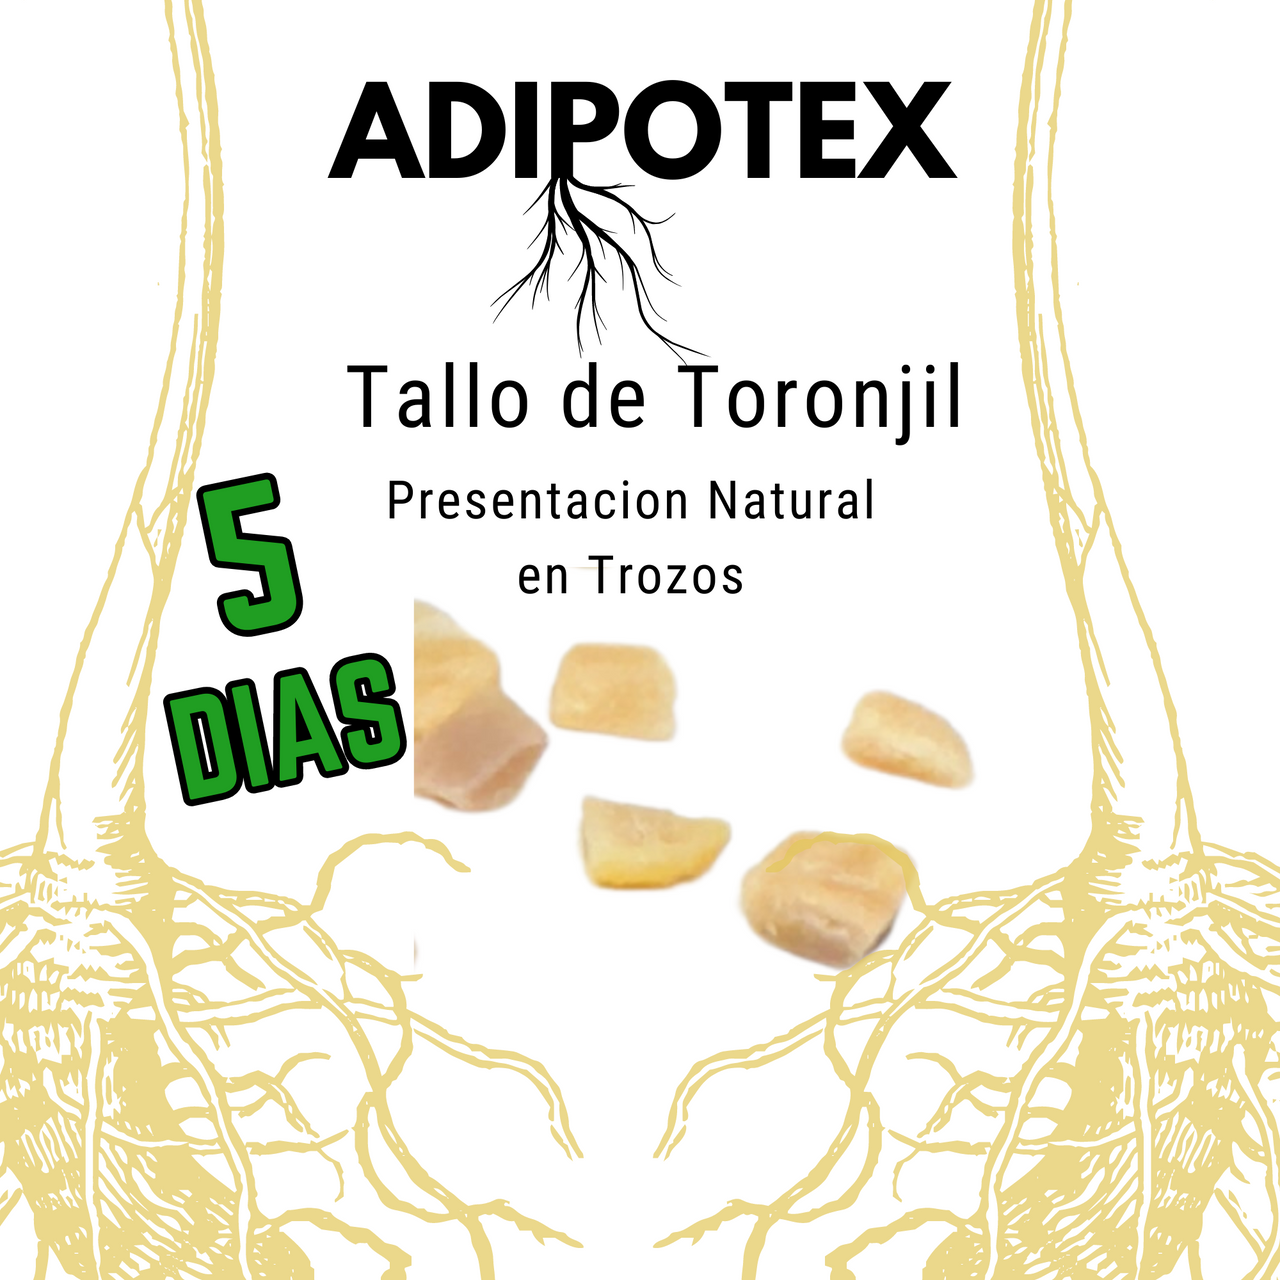 ADIPOTEX Tallo de Toronjil Raiz Trial Size - 5 Day